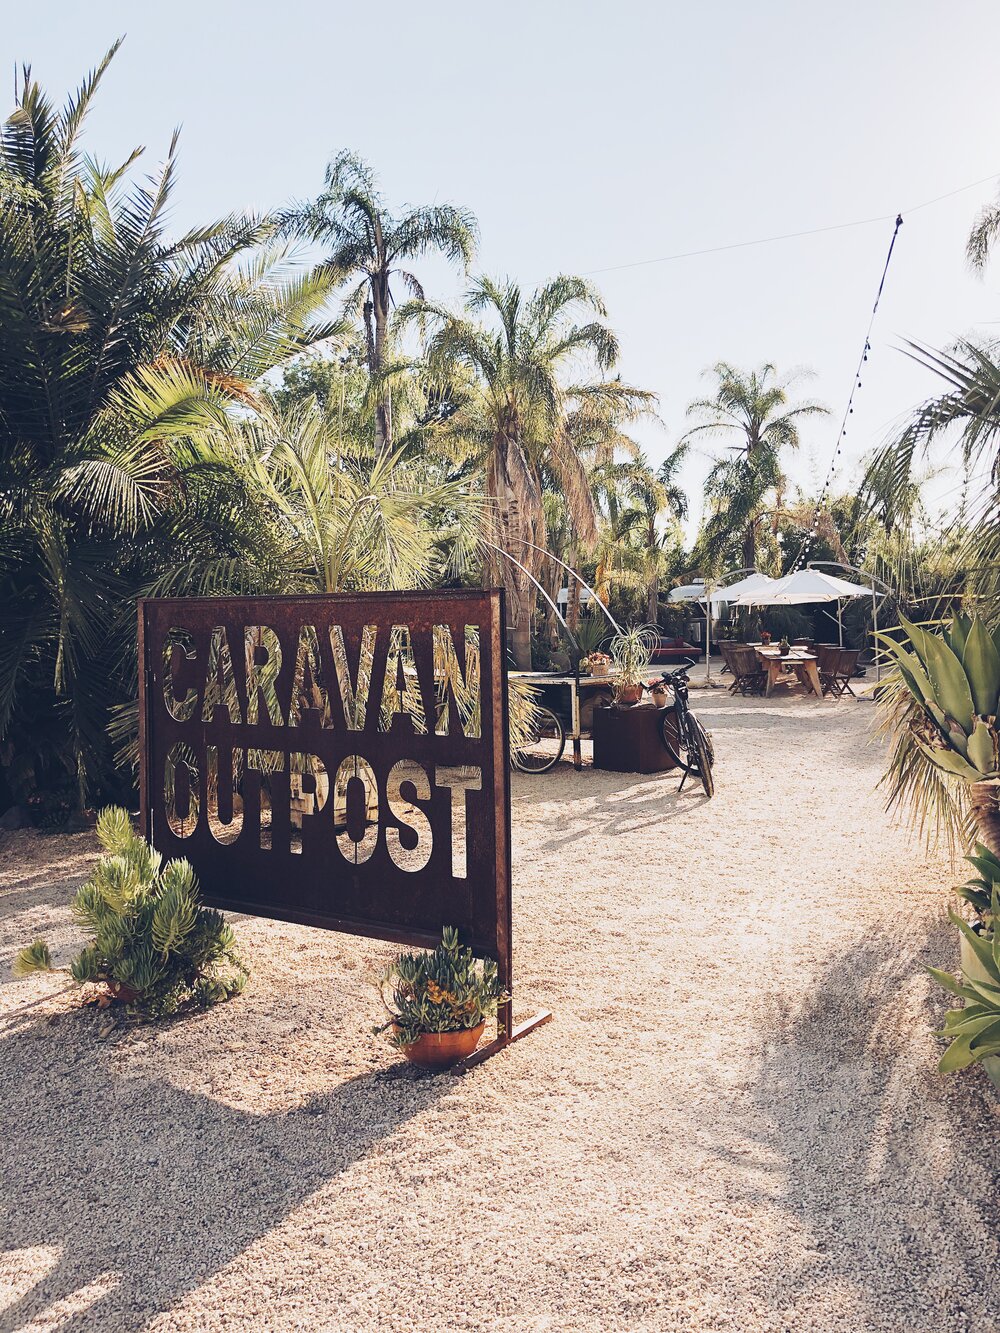 Caravan Outpost Ojai